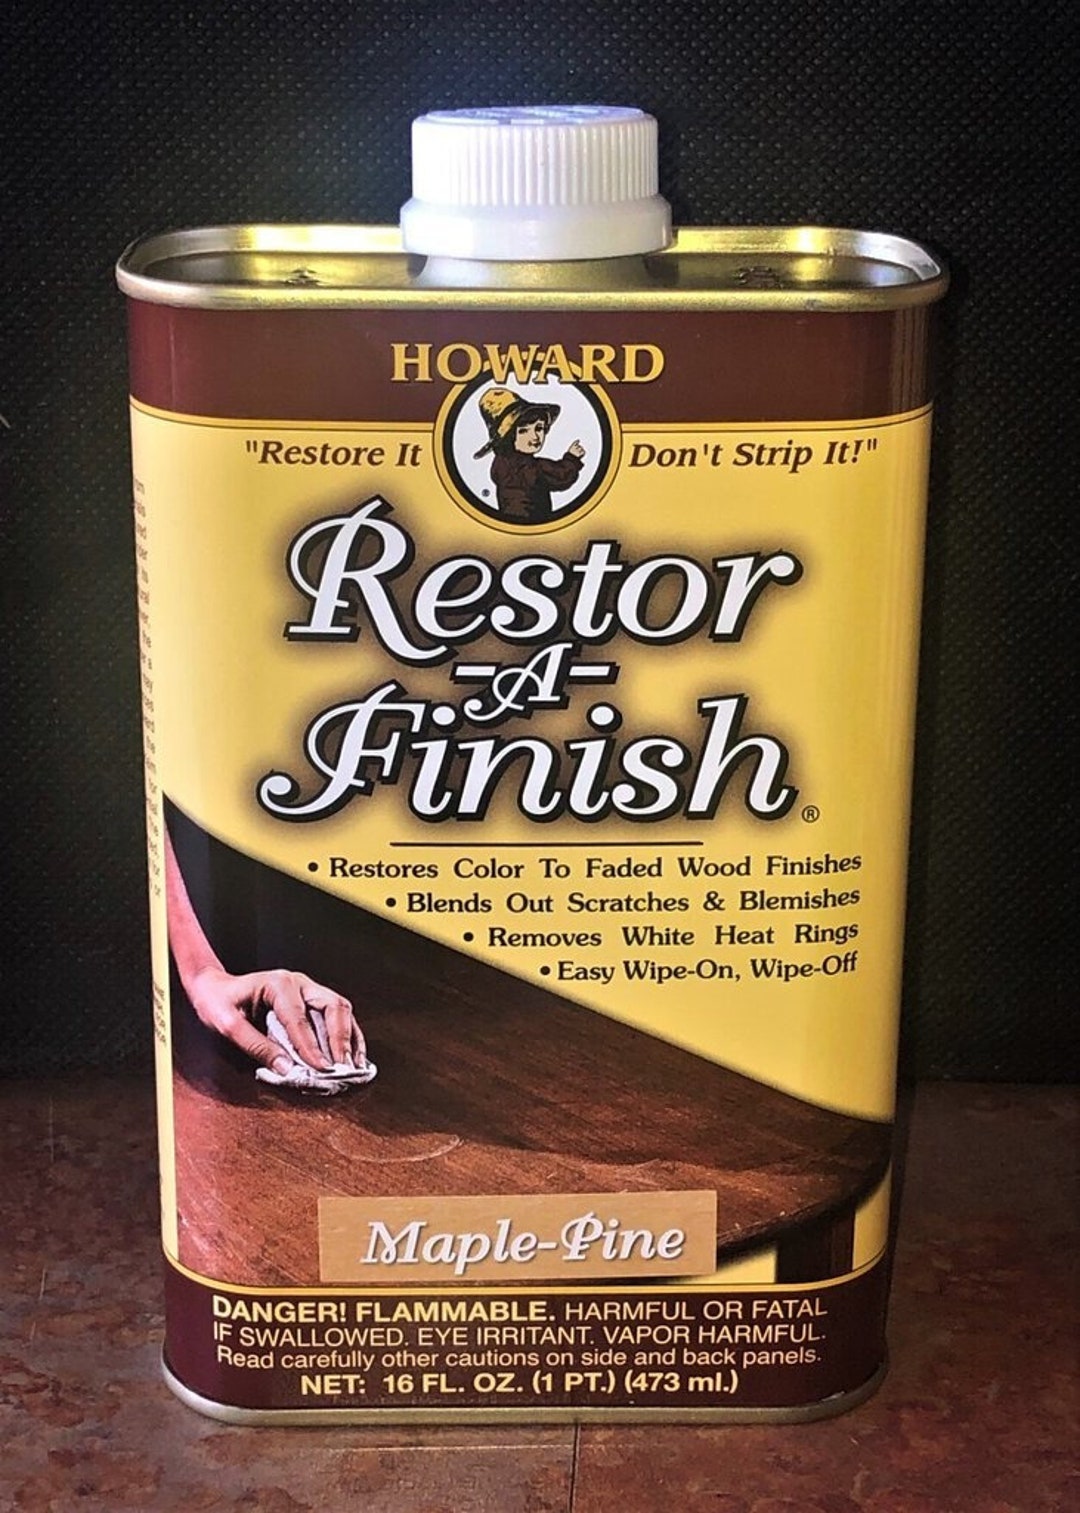 Howard Restor a Finish - How to Refinish Wood 